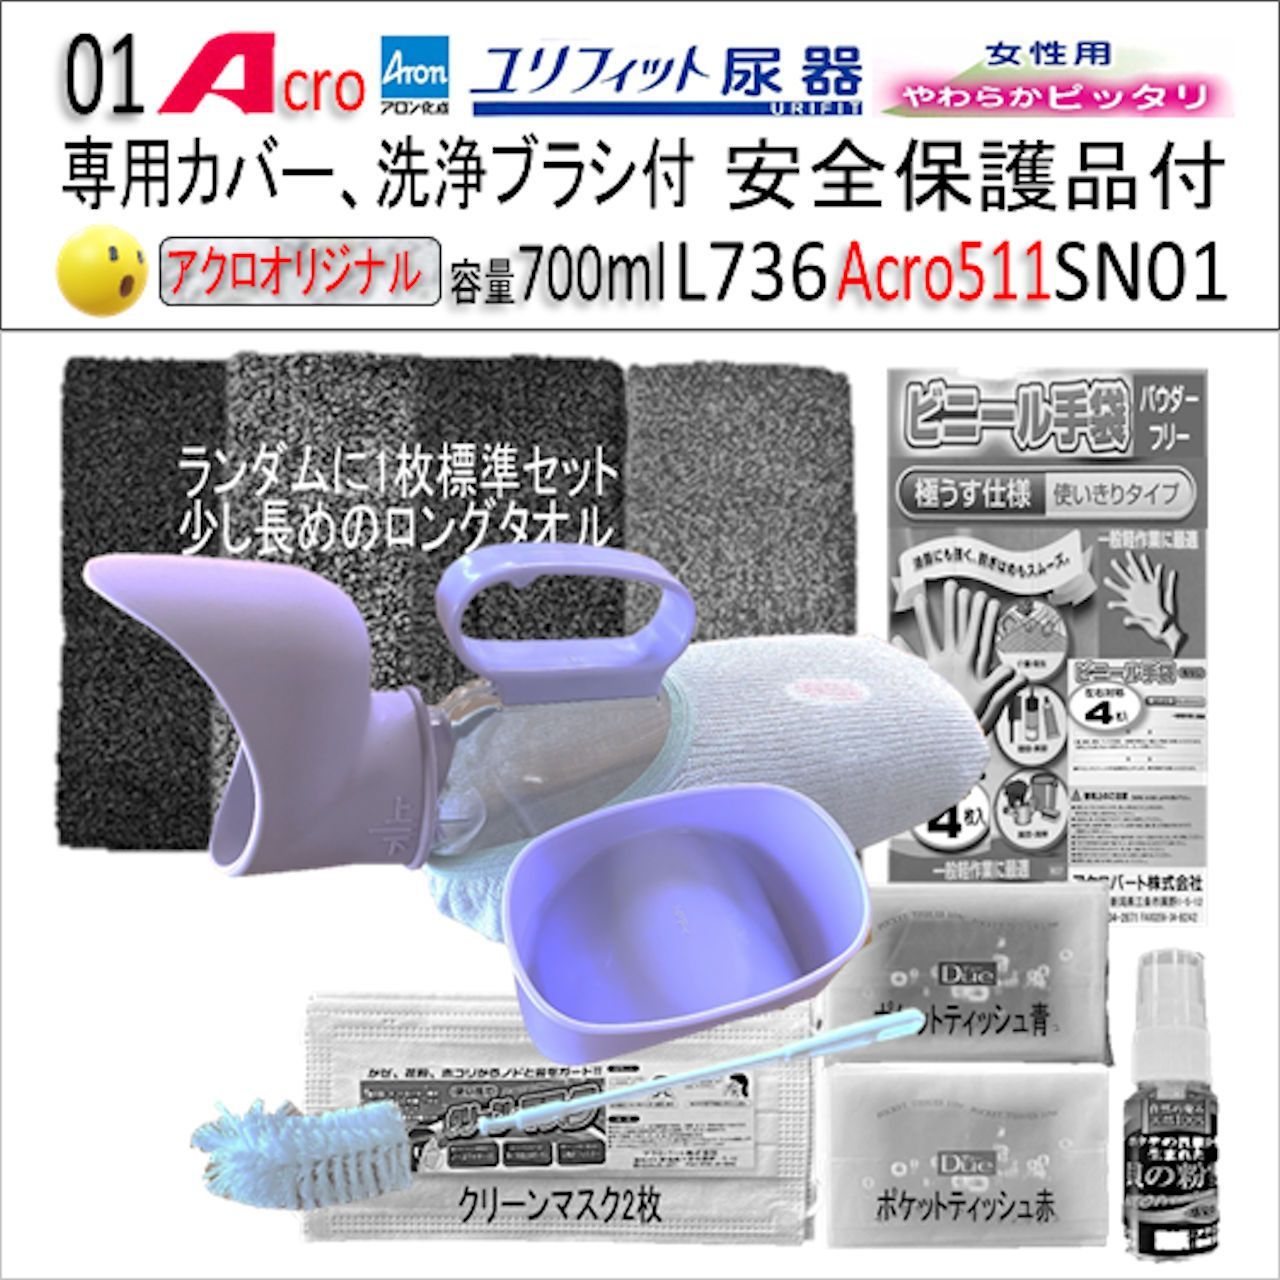 Acro511ユリフィット尿器女性用&安全保護用品付L736-SN01 - メルカリ